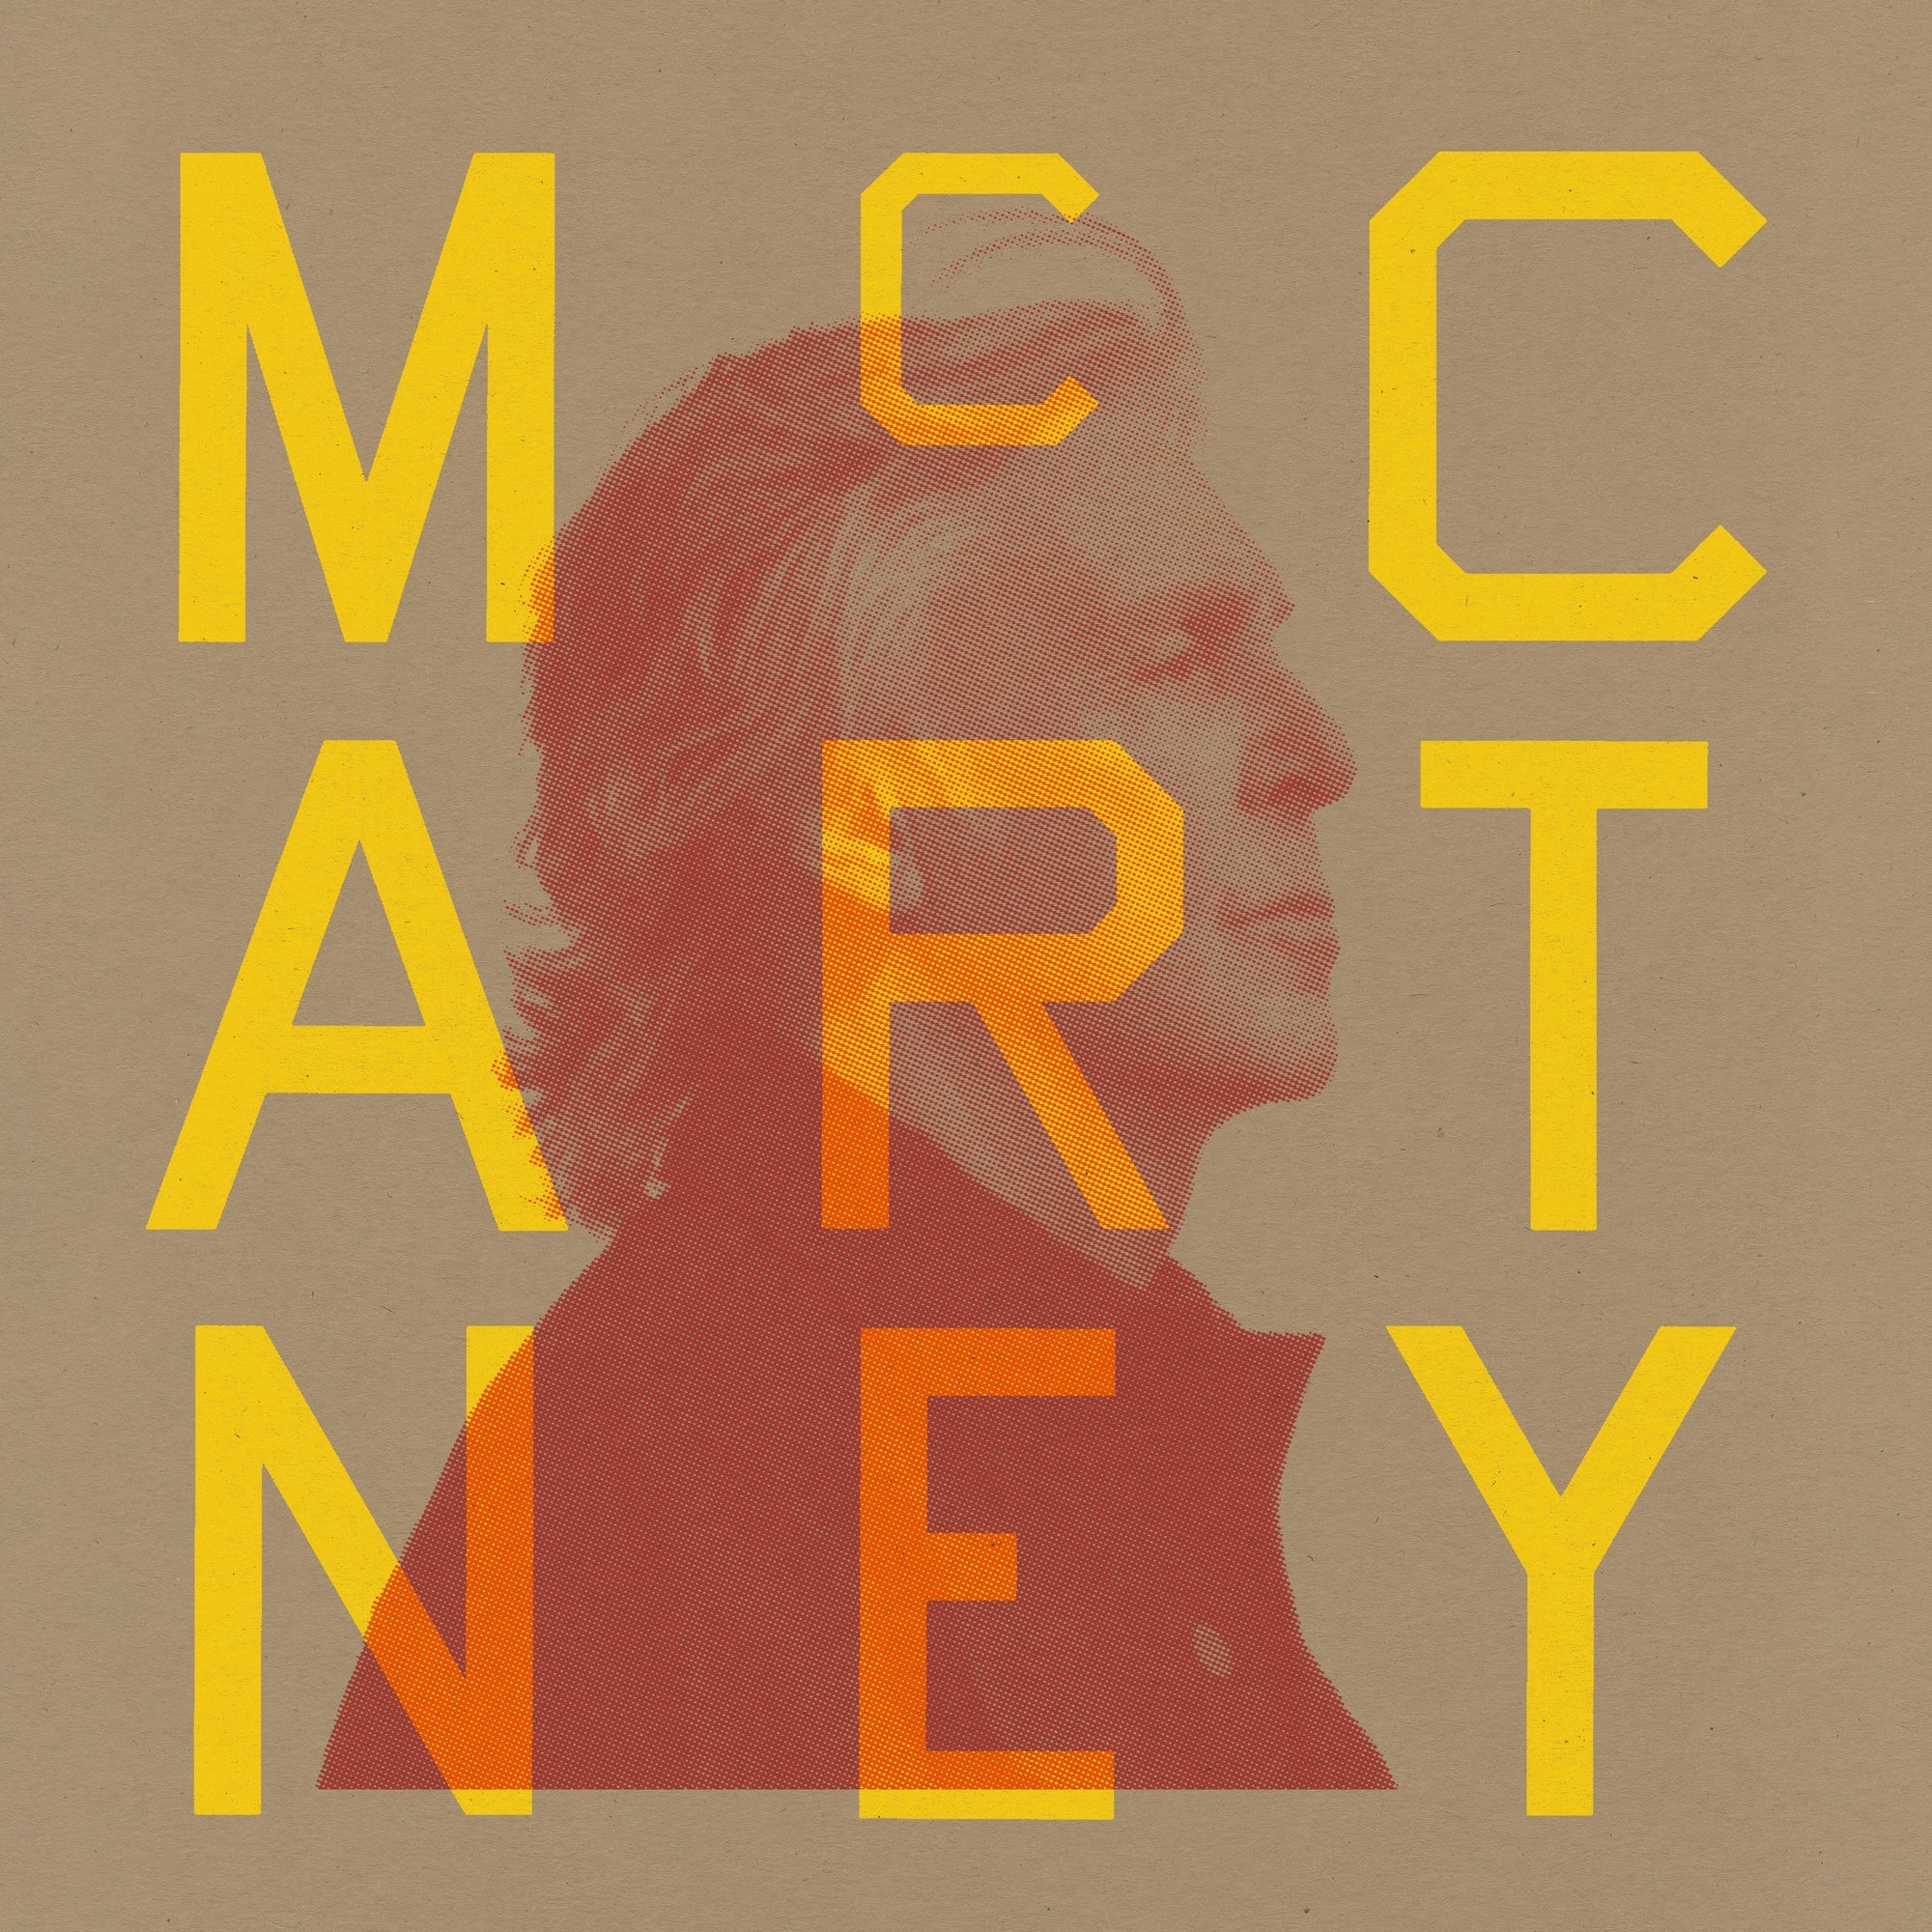 Paul McCartney - McCARTNEY III — 3x3 EDITION